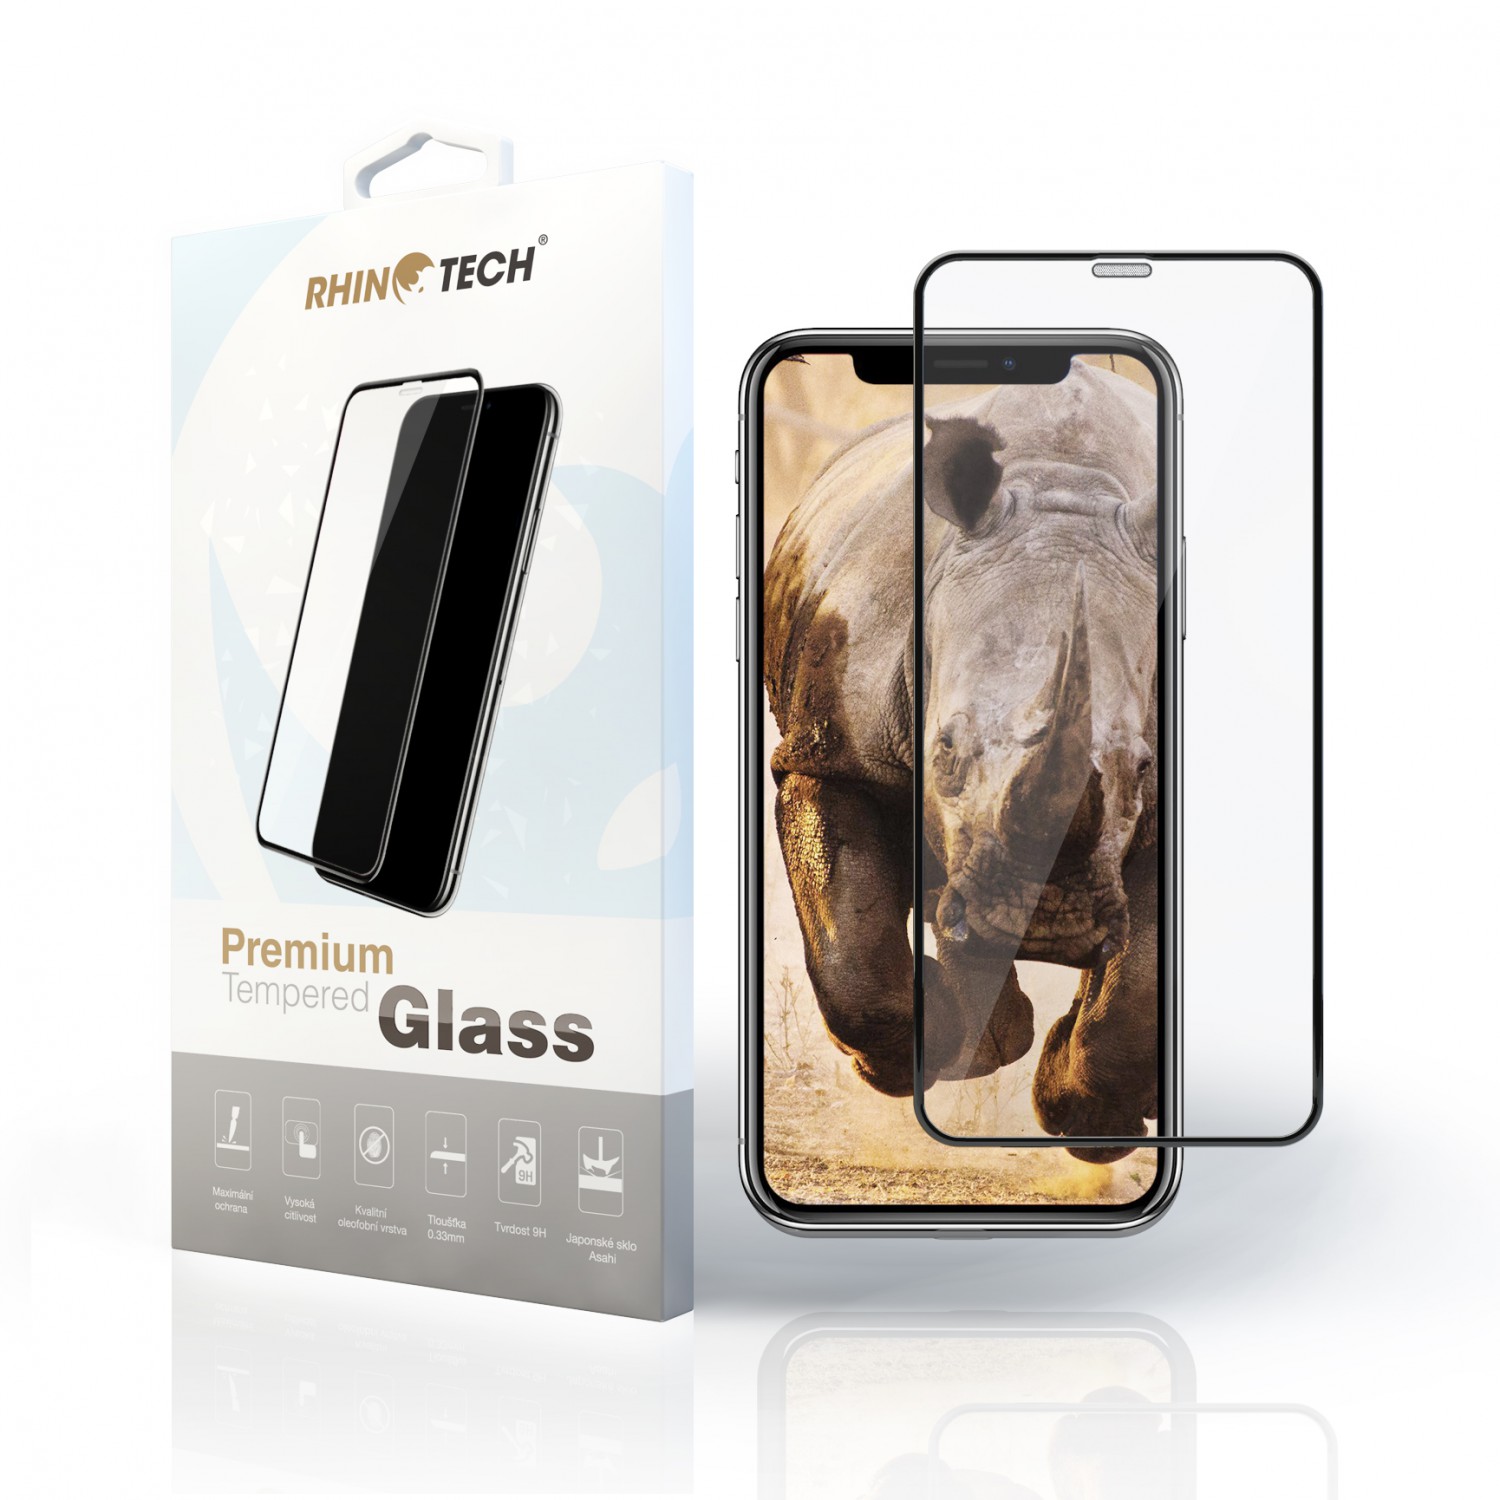 RhinoTech 2 Tvrzené ochranné 2.5D sklo pro Xiaomi Pocophone F1 černá